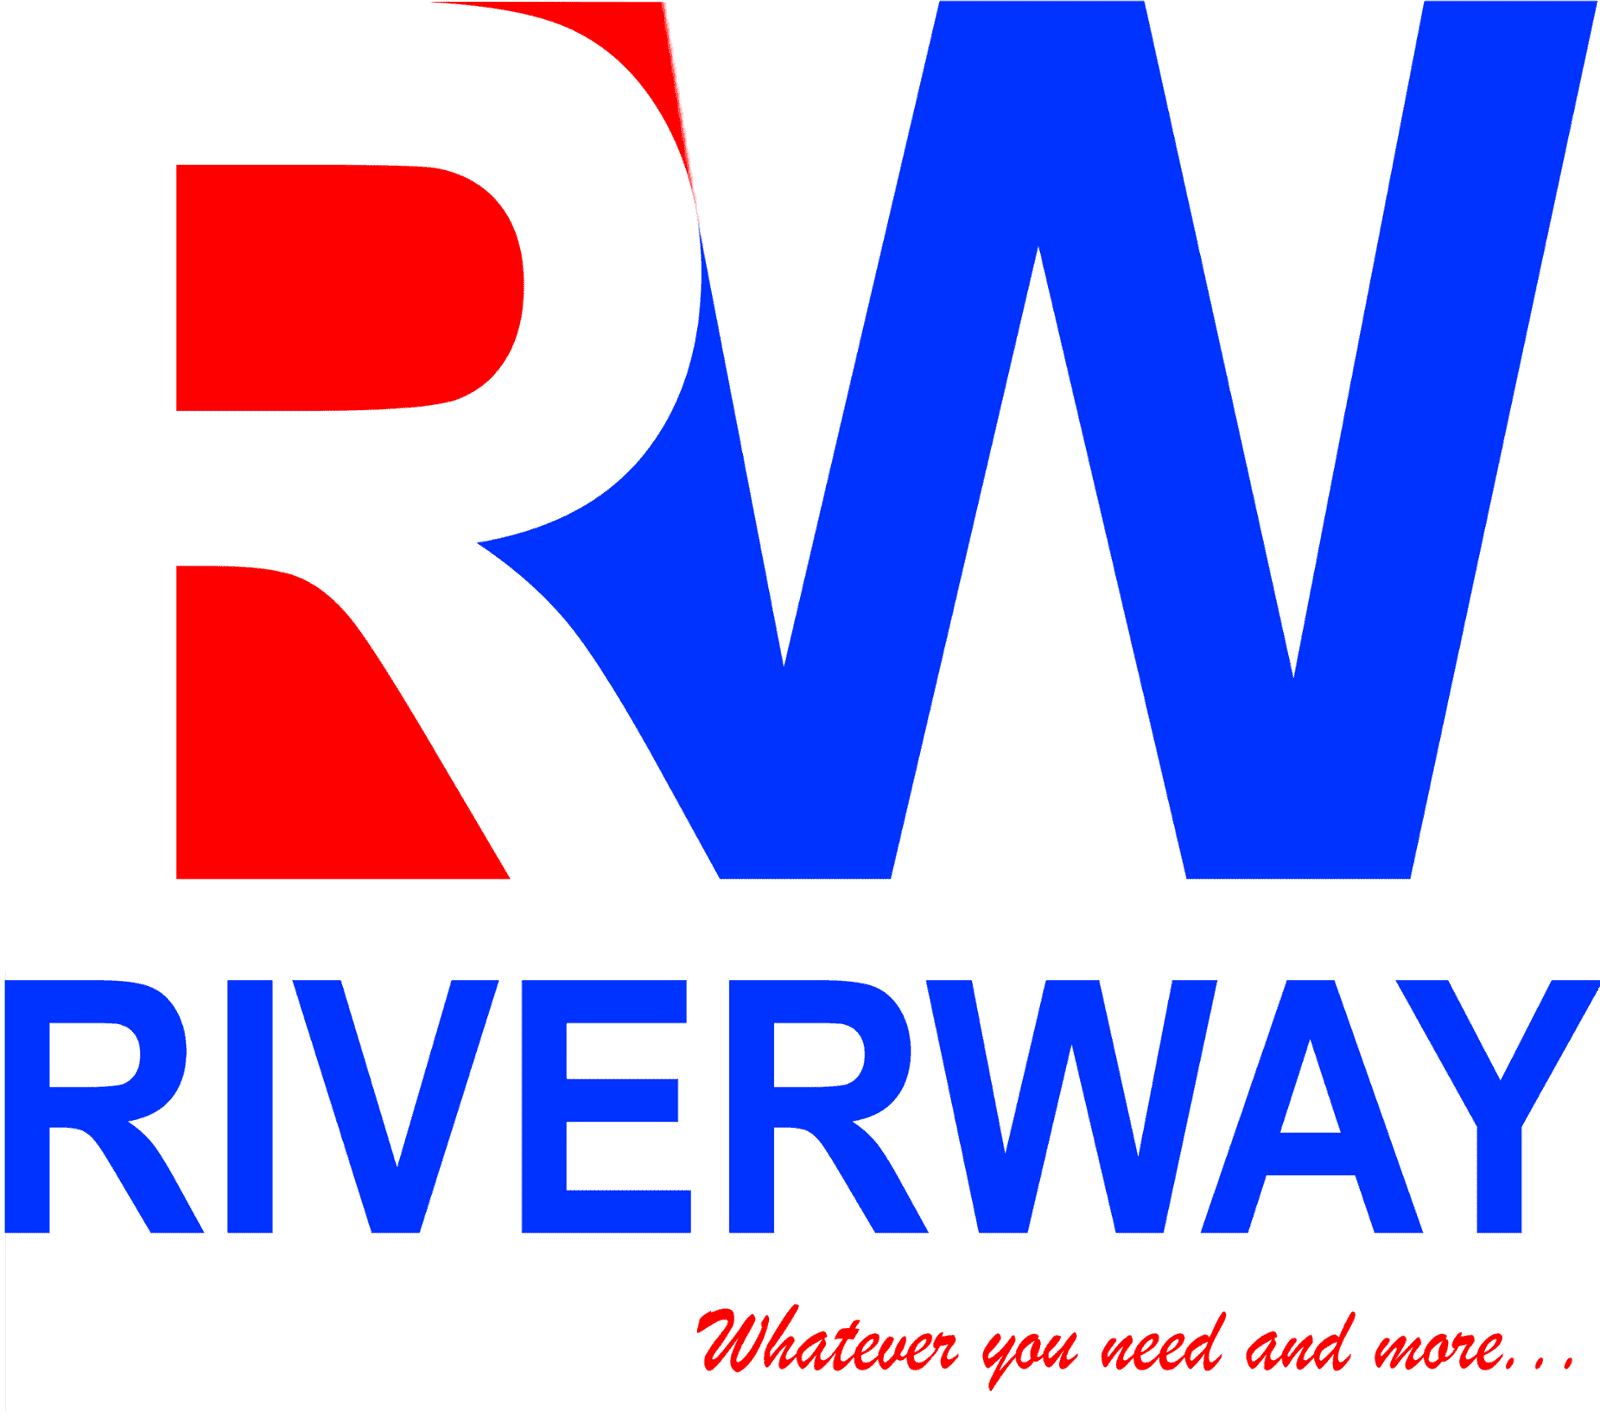 RIVERWAY.NET